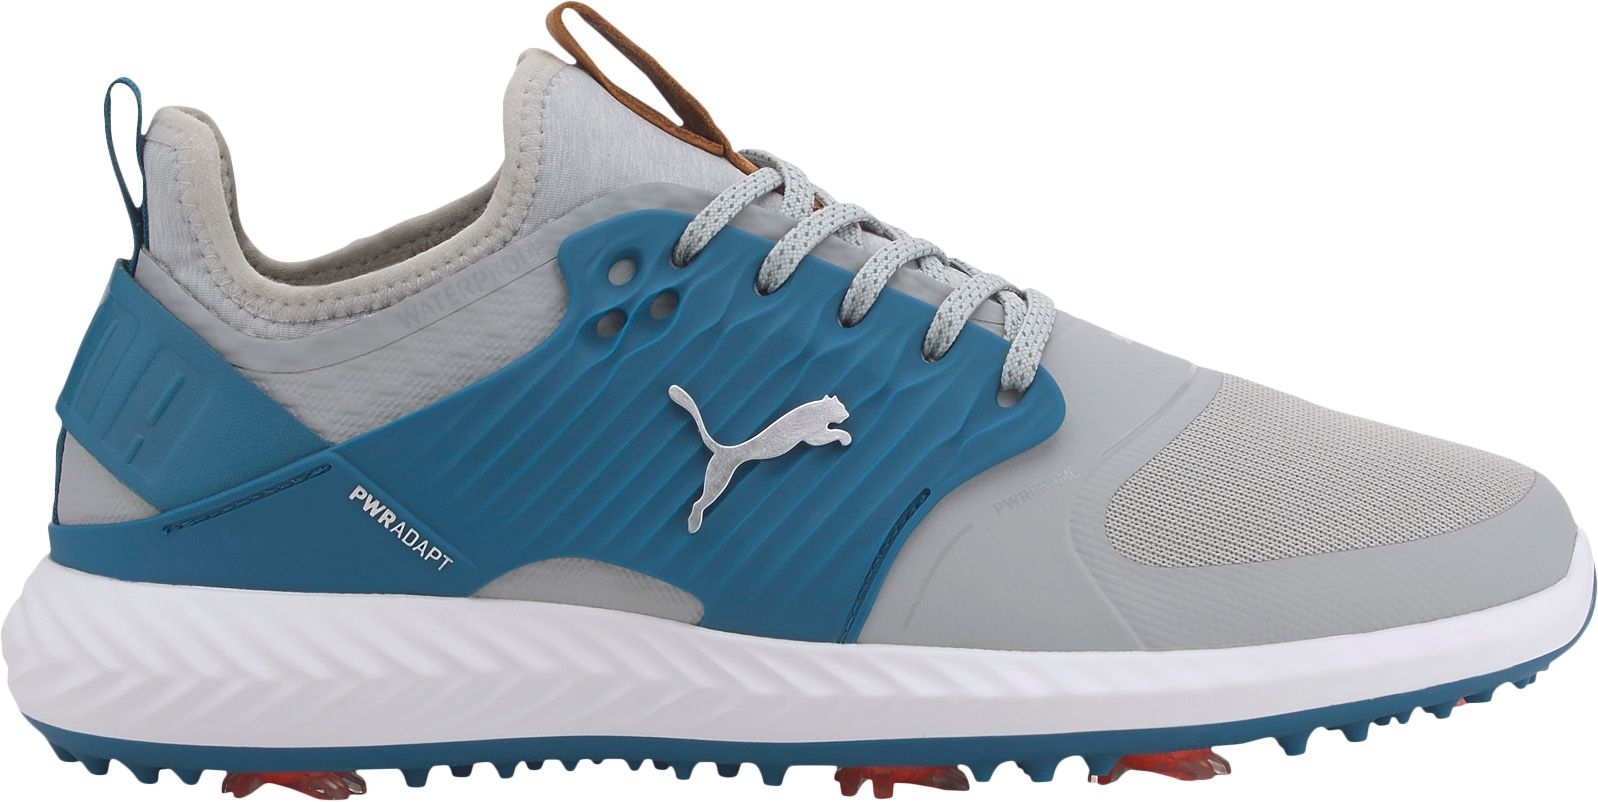 puma golf shoes size 15